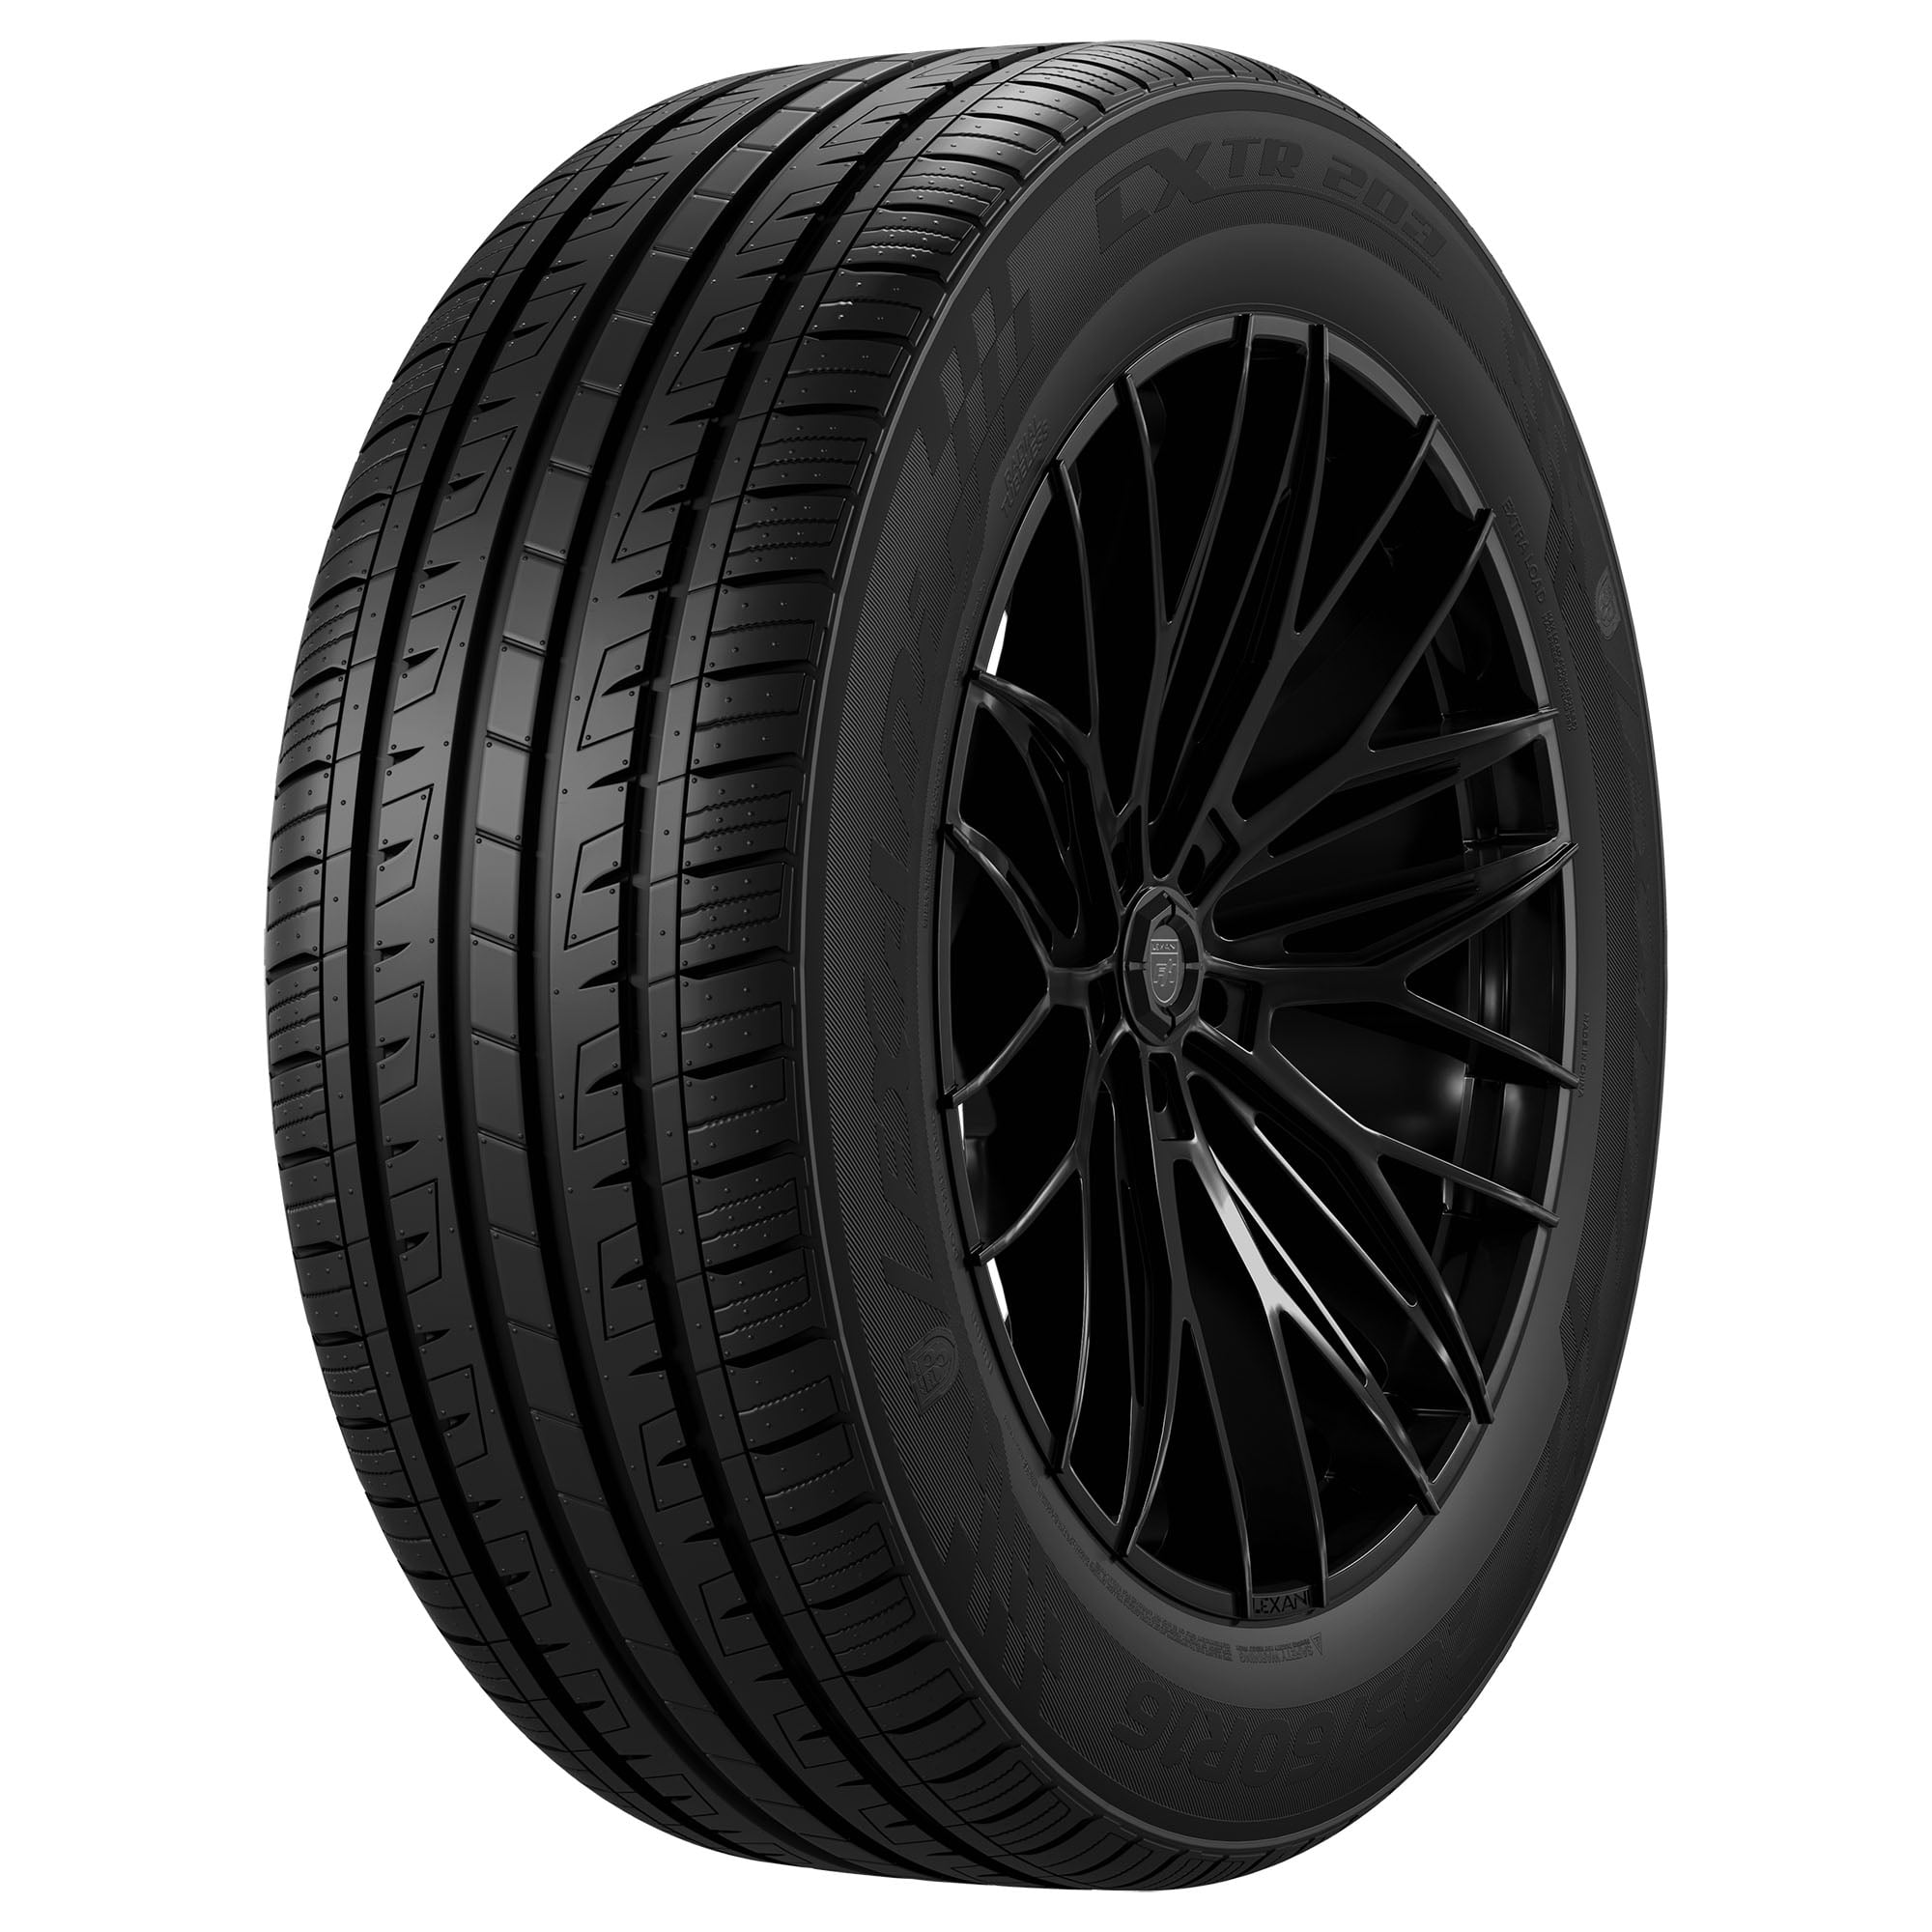  Haida HD667 All-Season Touring Radial Tire-205/55R16 205/55/16  205/55-16 91V Load Range SL 4-Ply BSW Black Side Wall : Automotive